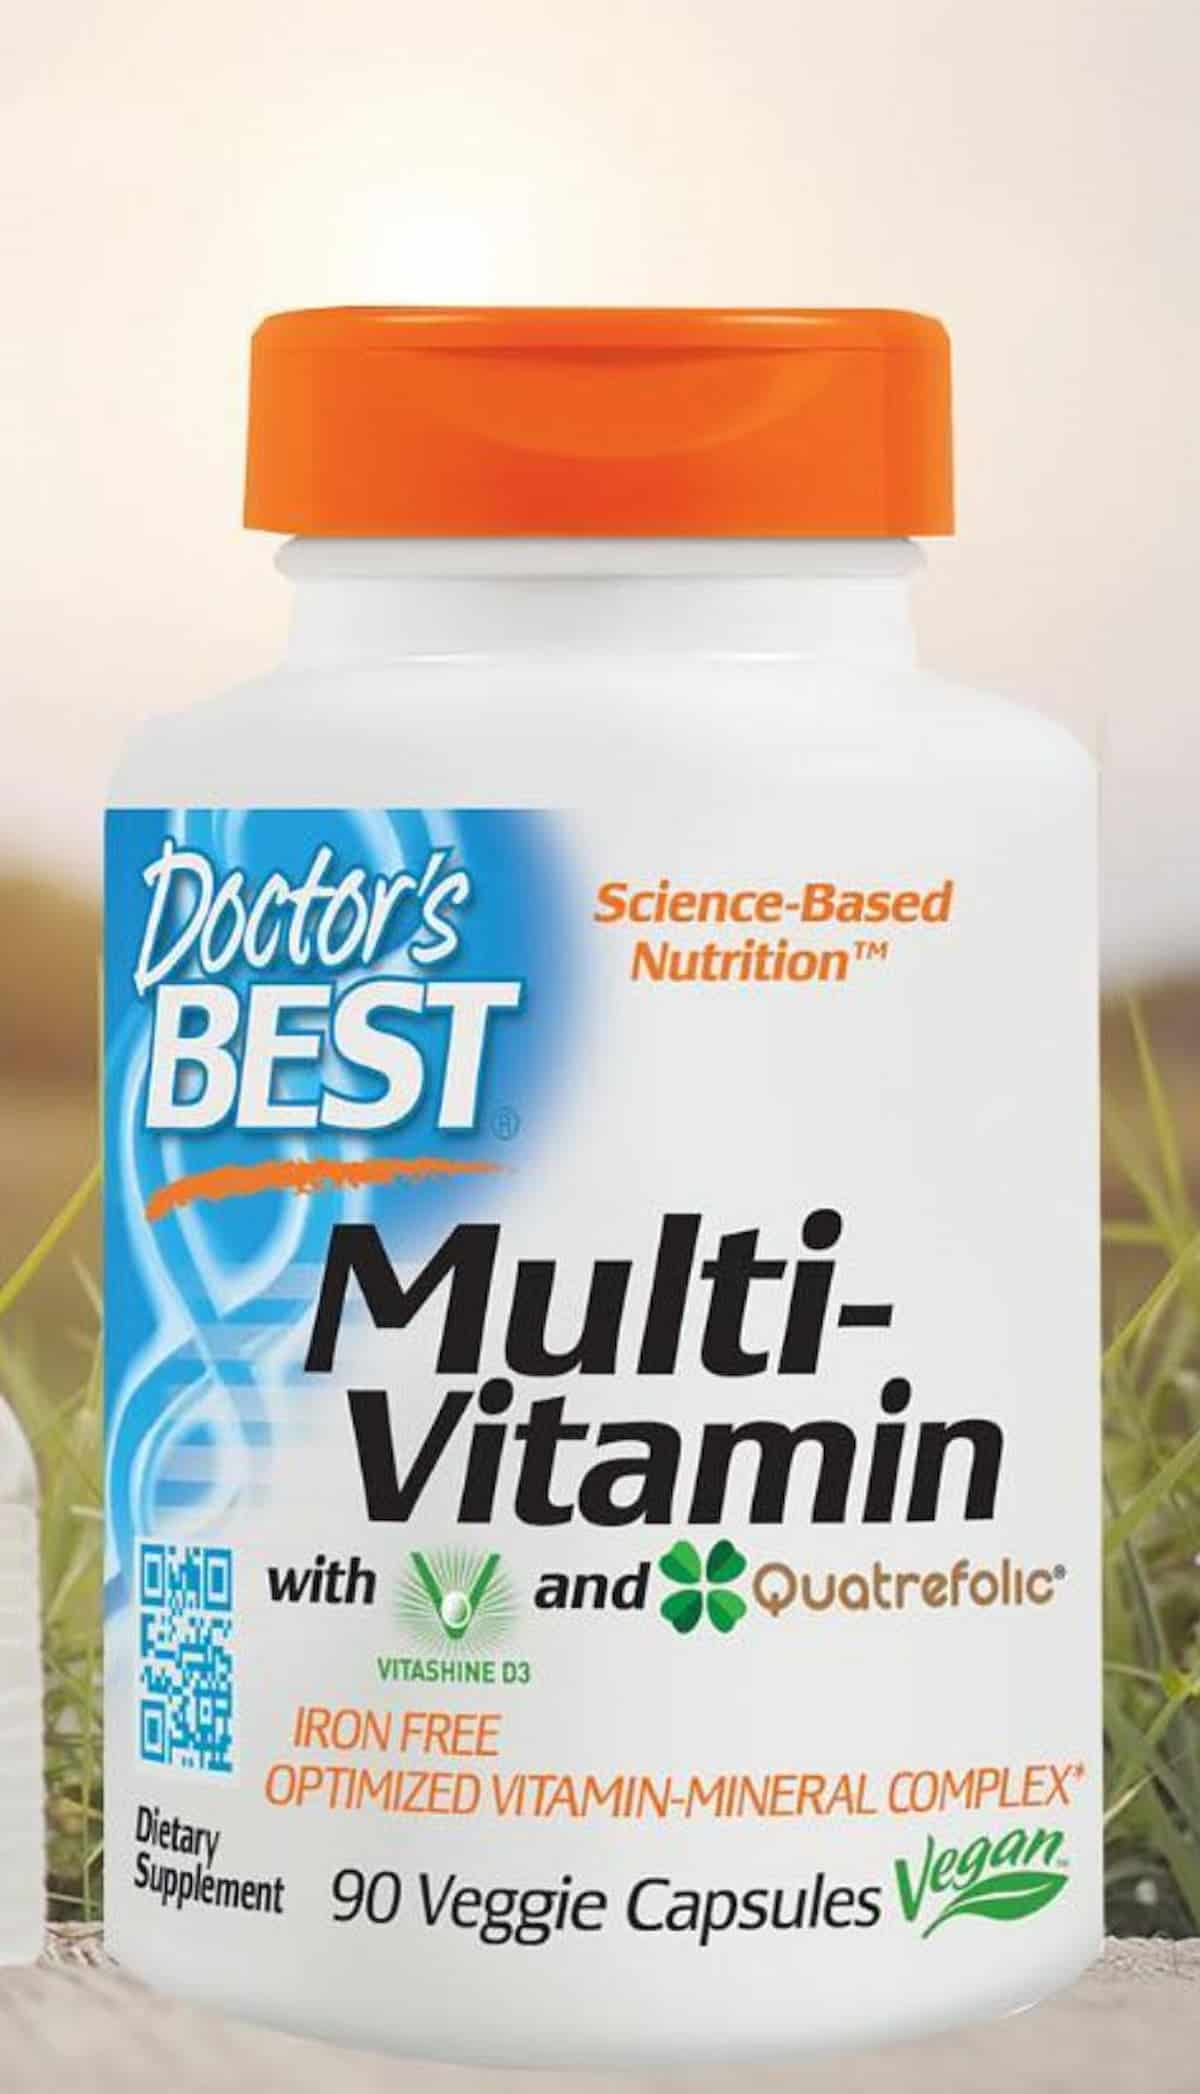 A bottle of Doctor's Best brand vegan multivitamins.